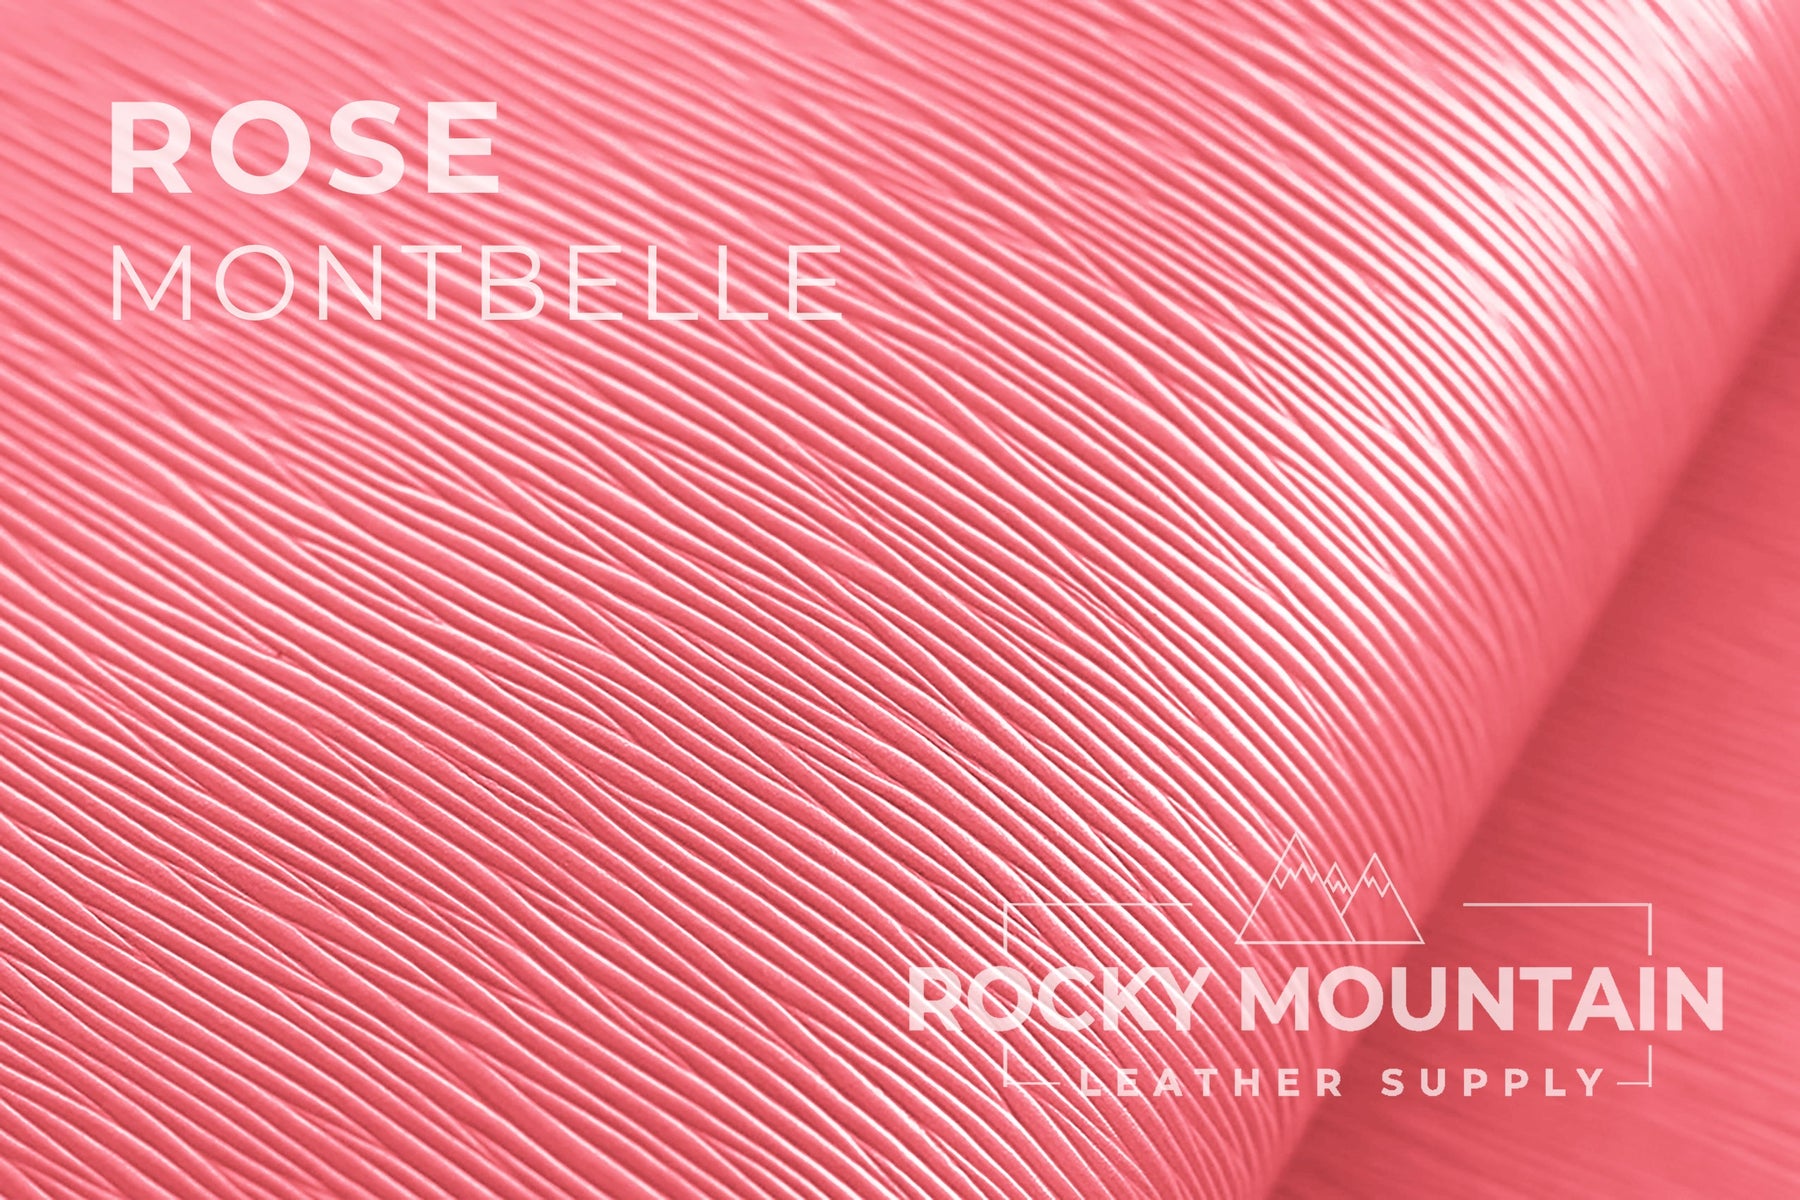 Montbelle (Epi) 🇪🇺 - Luxury Calfskin Leather (HIDES)